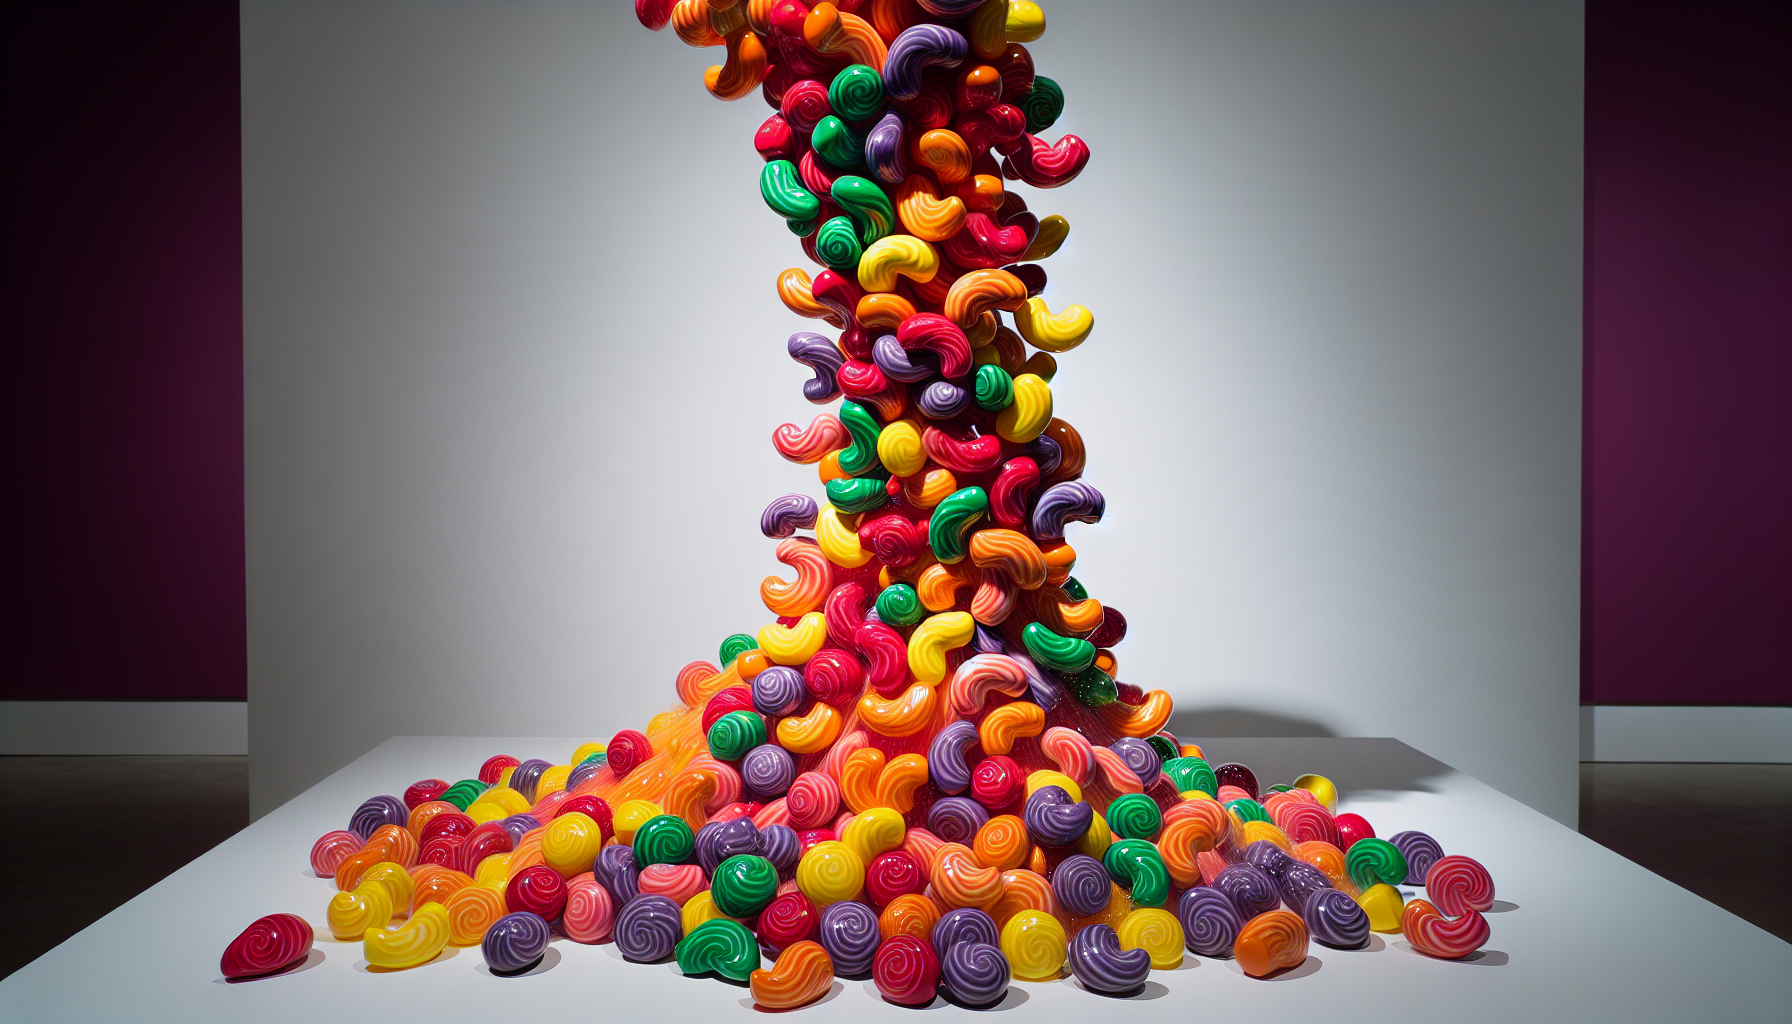 Artistic representation of vibrant Runts candy